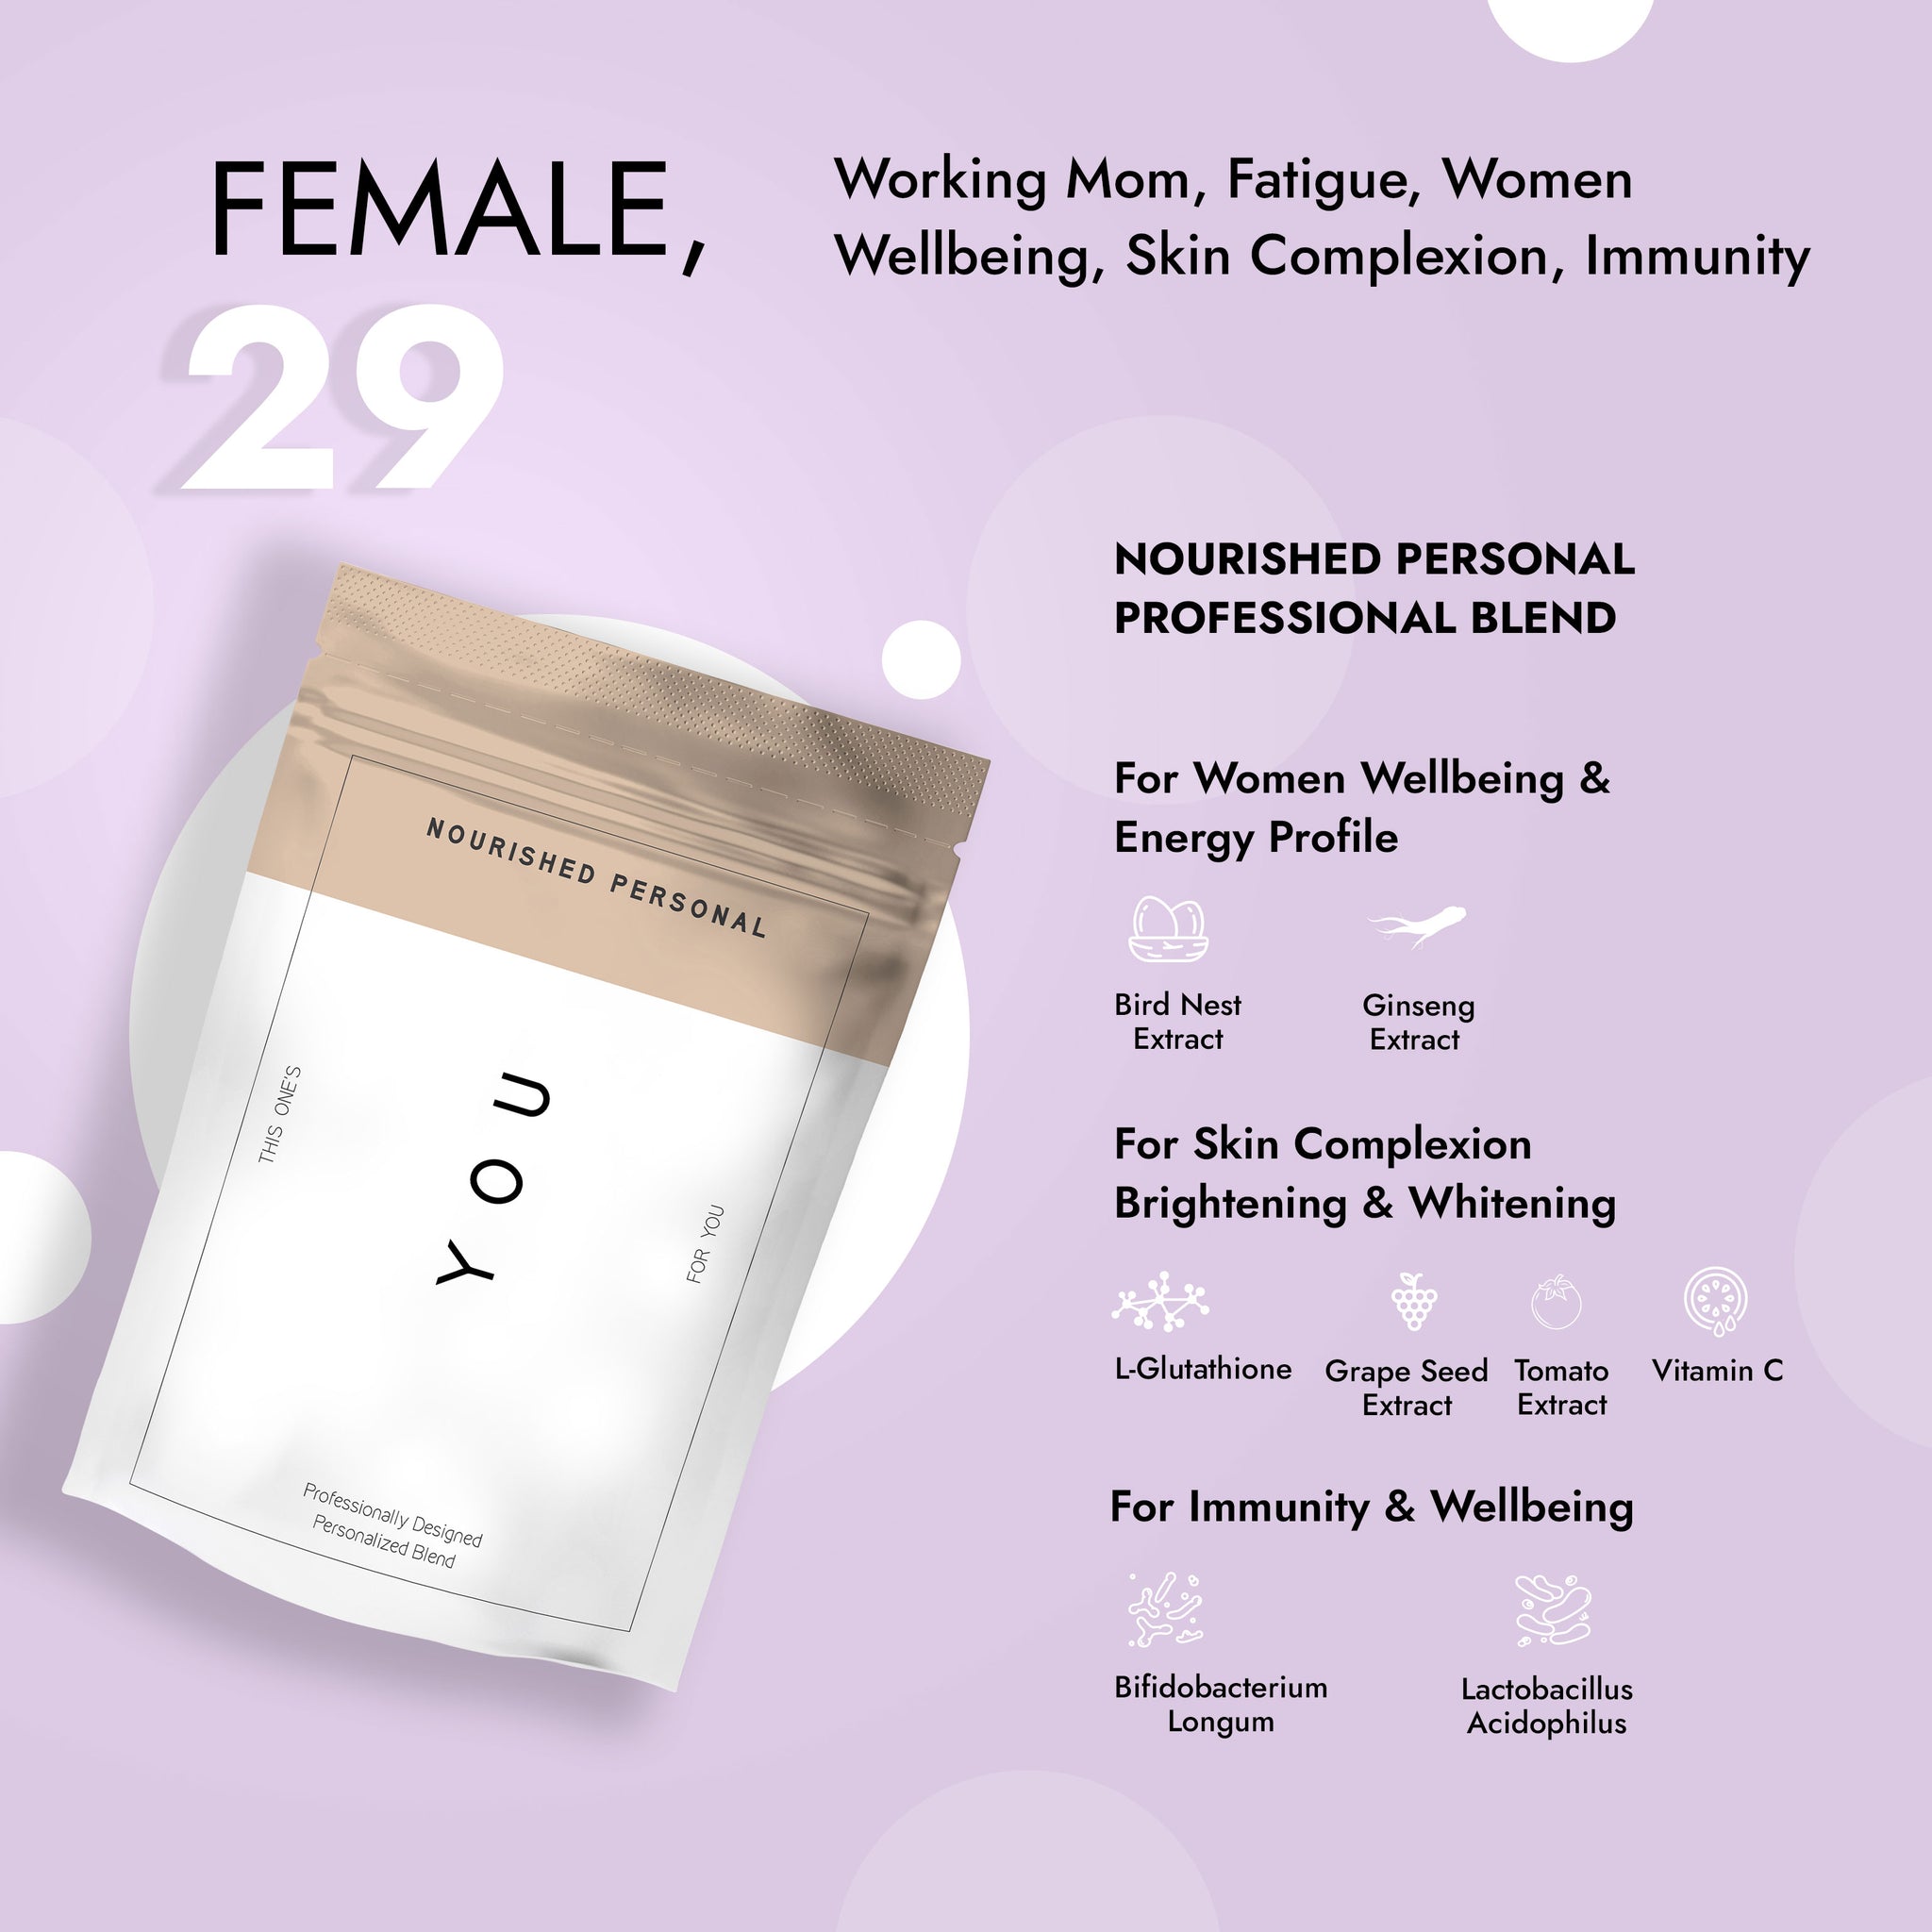 Case Study 48: Female, 29 - Working Mom, Fatigue, Women Wellbeing, Skin Complexion, Immunity